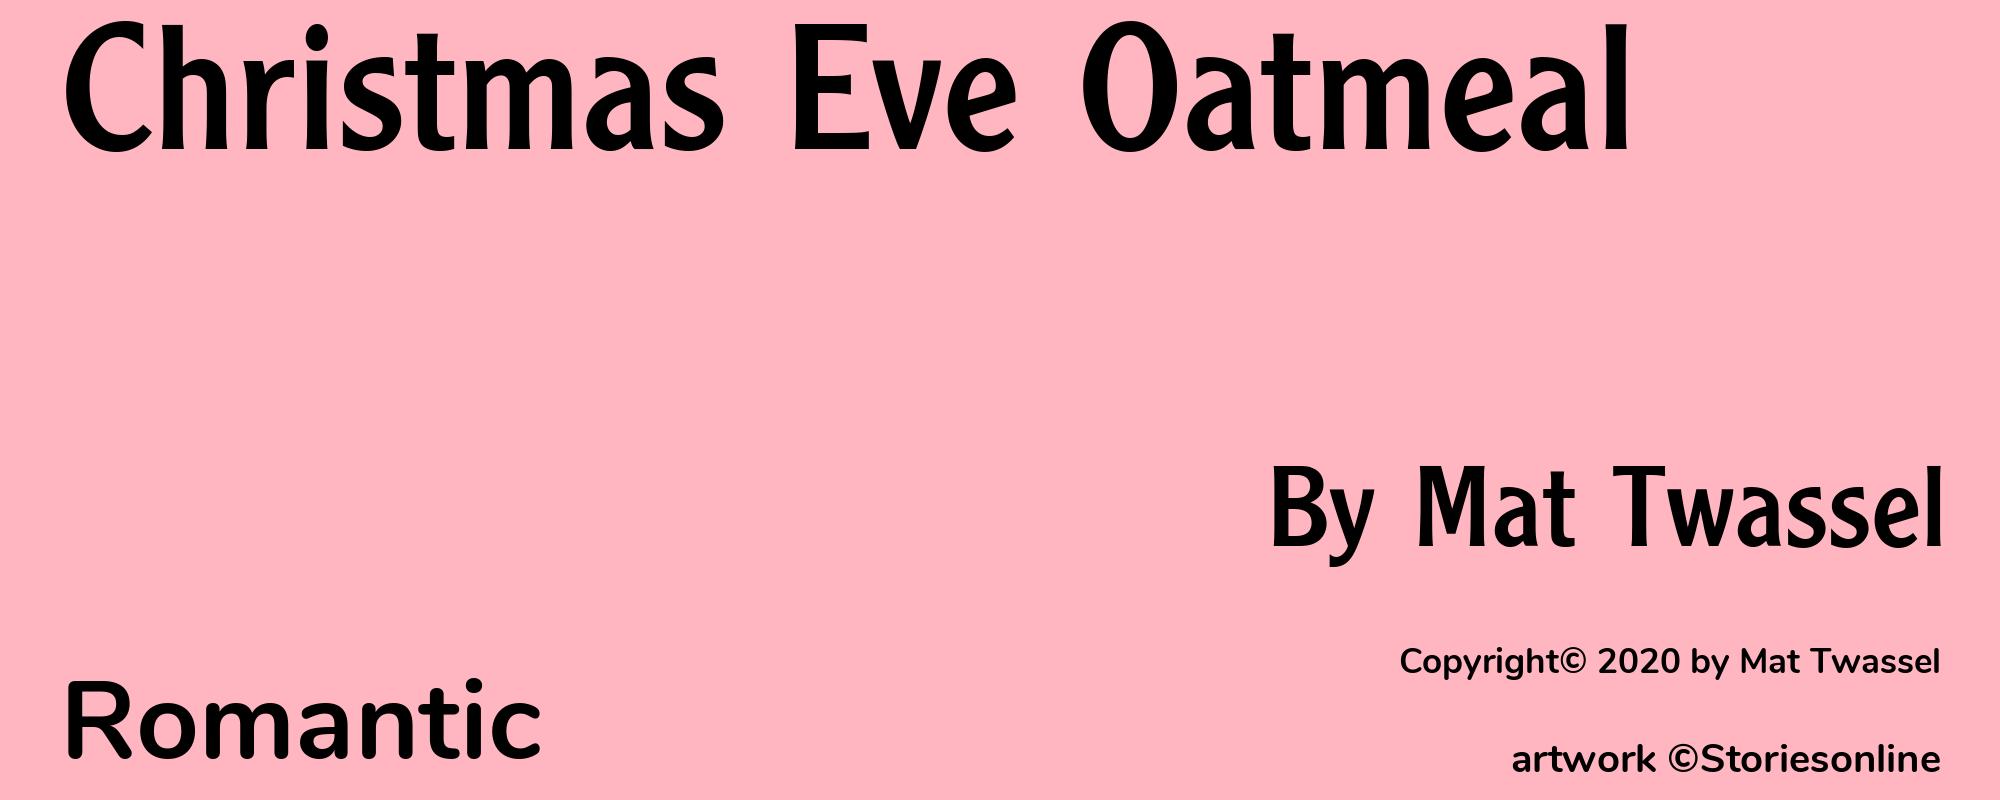 Christmas Eve Oatmeal - Cover